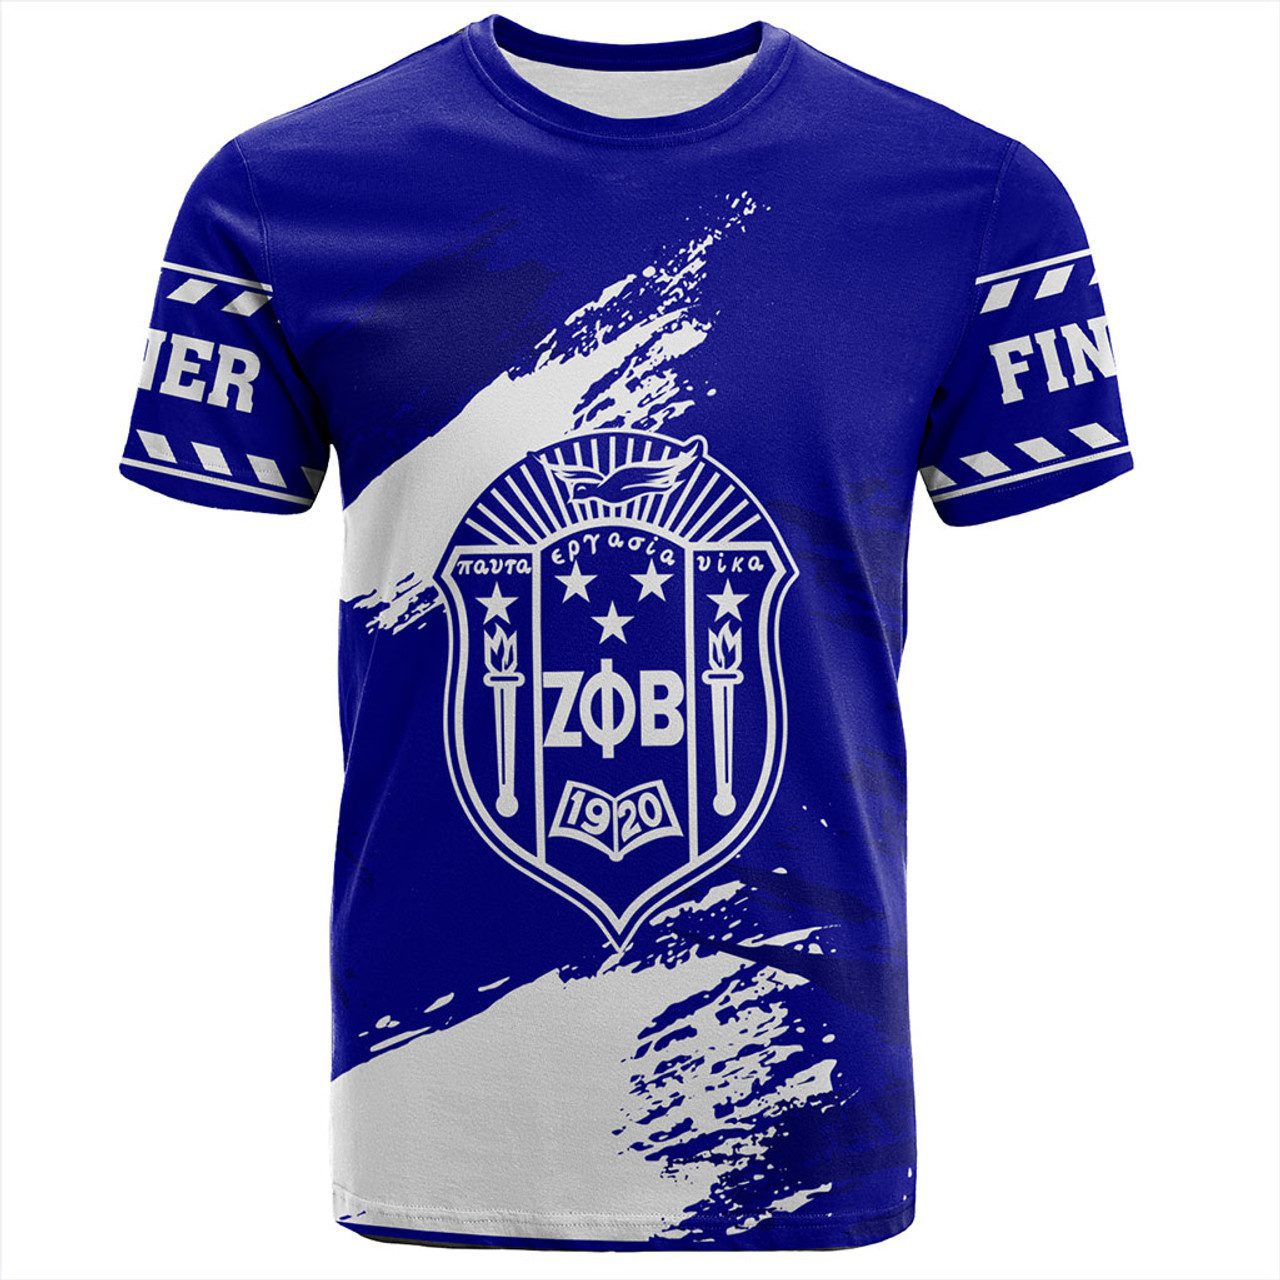 Zeta Phi Beta T-Shirt Nickname Style Grunge